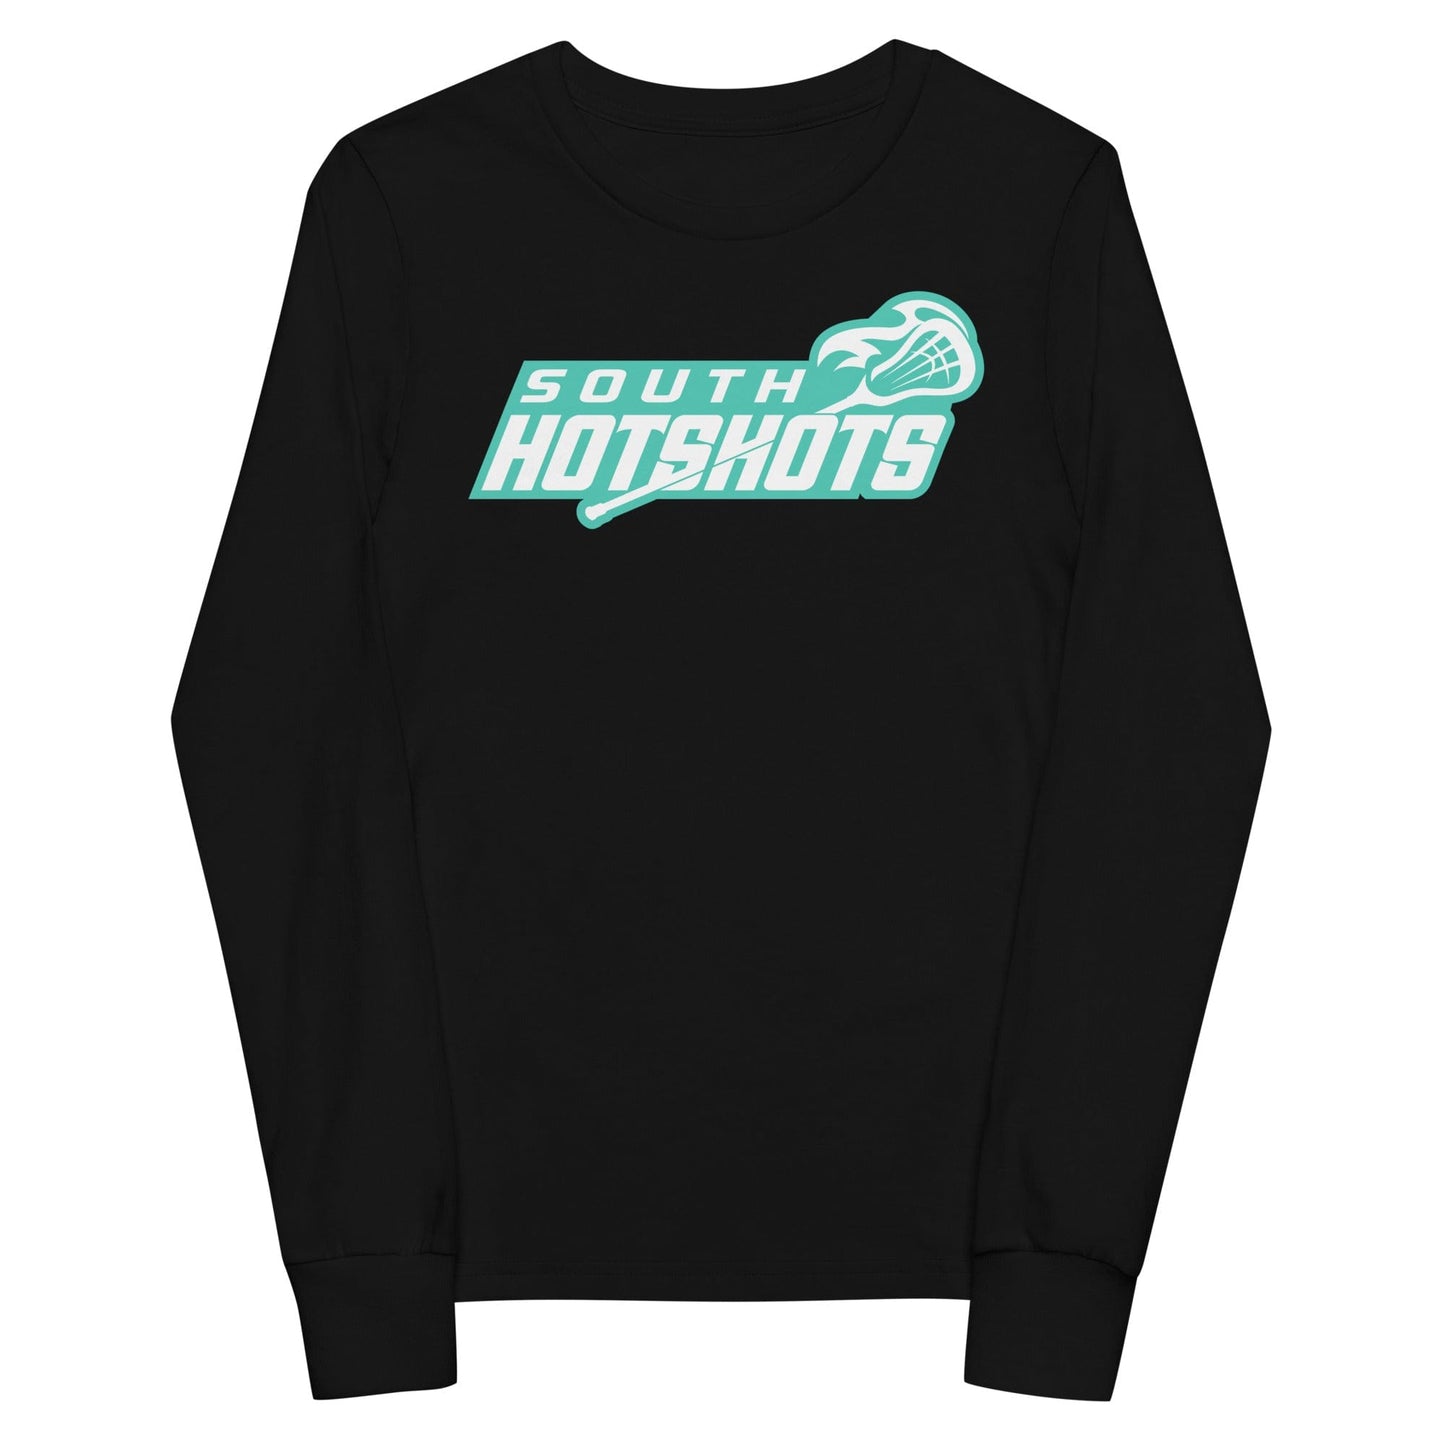 South Hotshots Lacrosse Youth Cotton Long Sleeve T-Shirt Signature Lacrosse